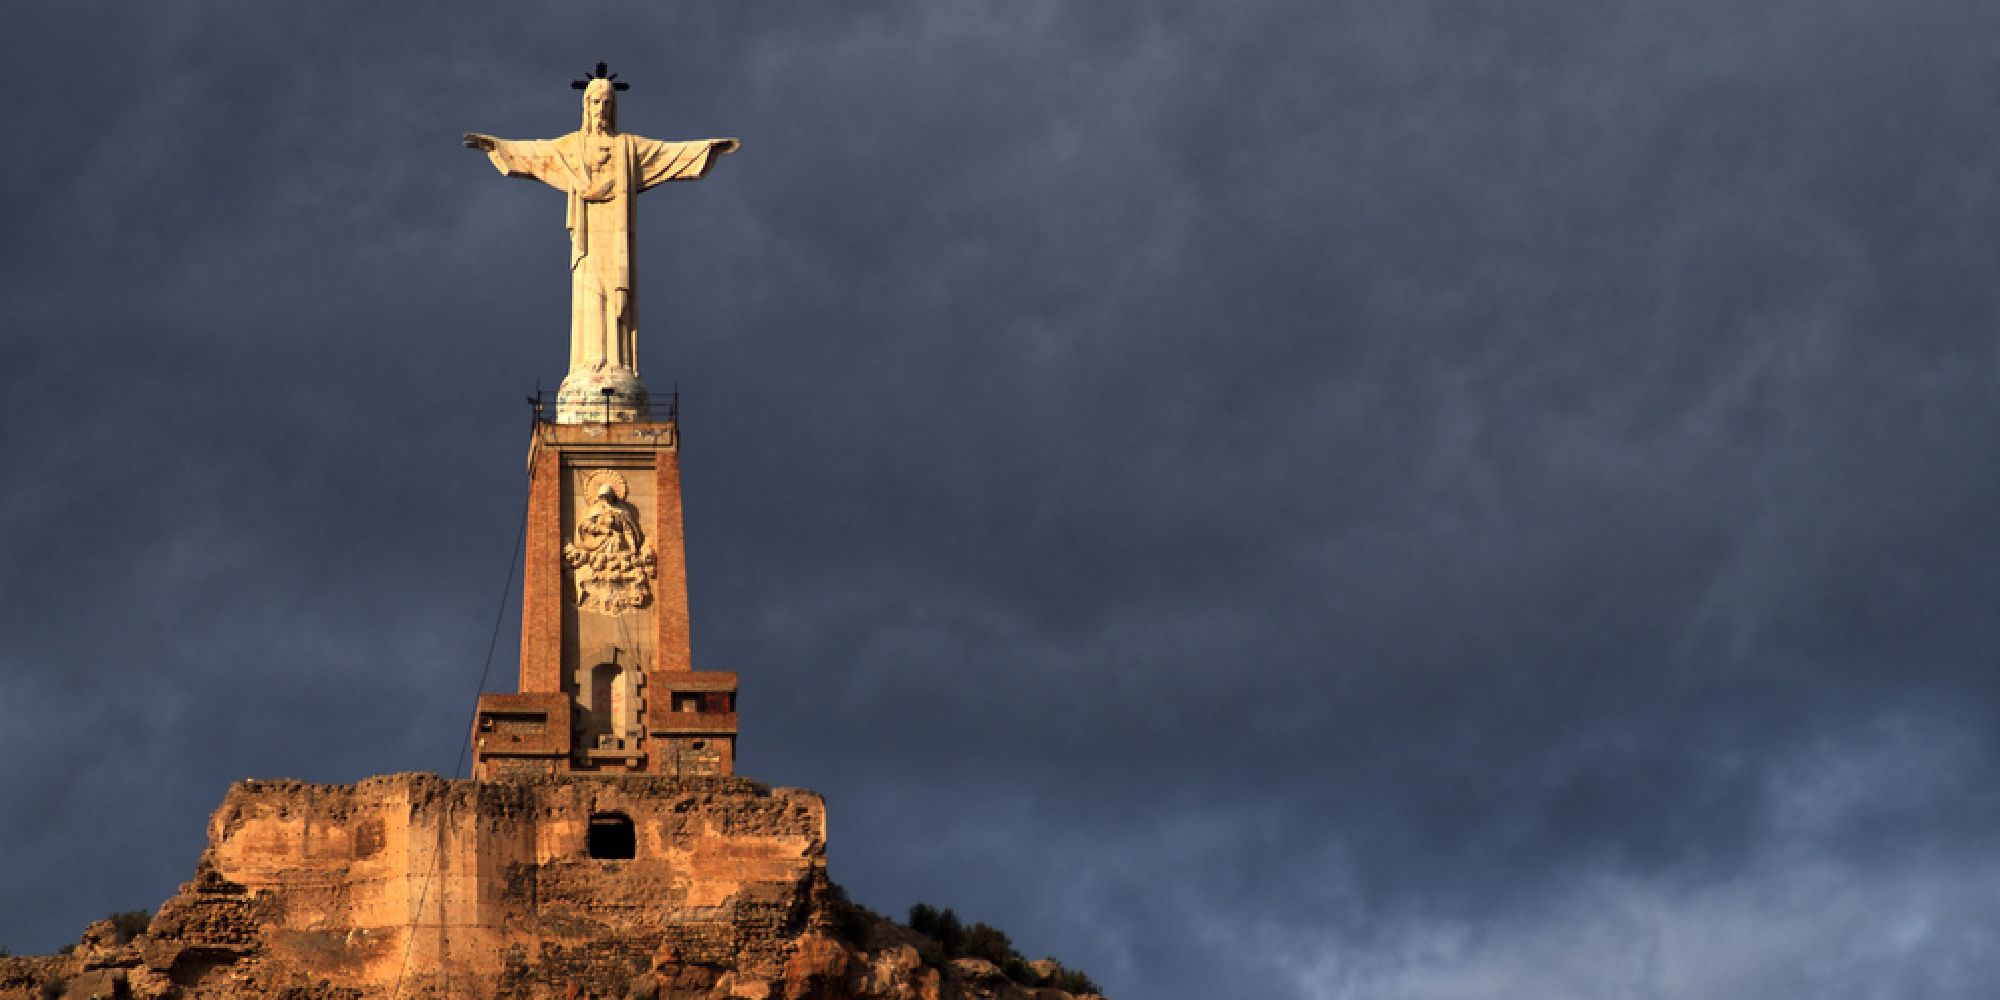 The Christ of Monteagudo statue in Spain